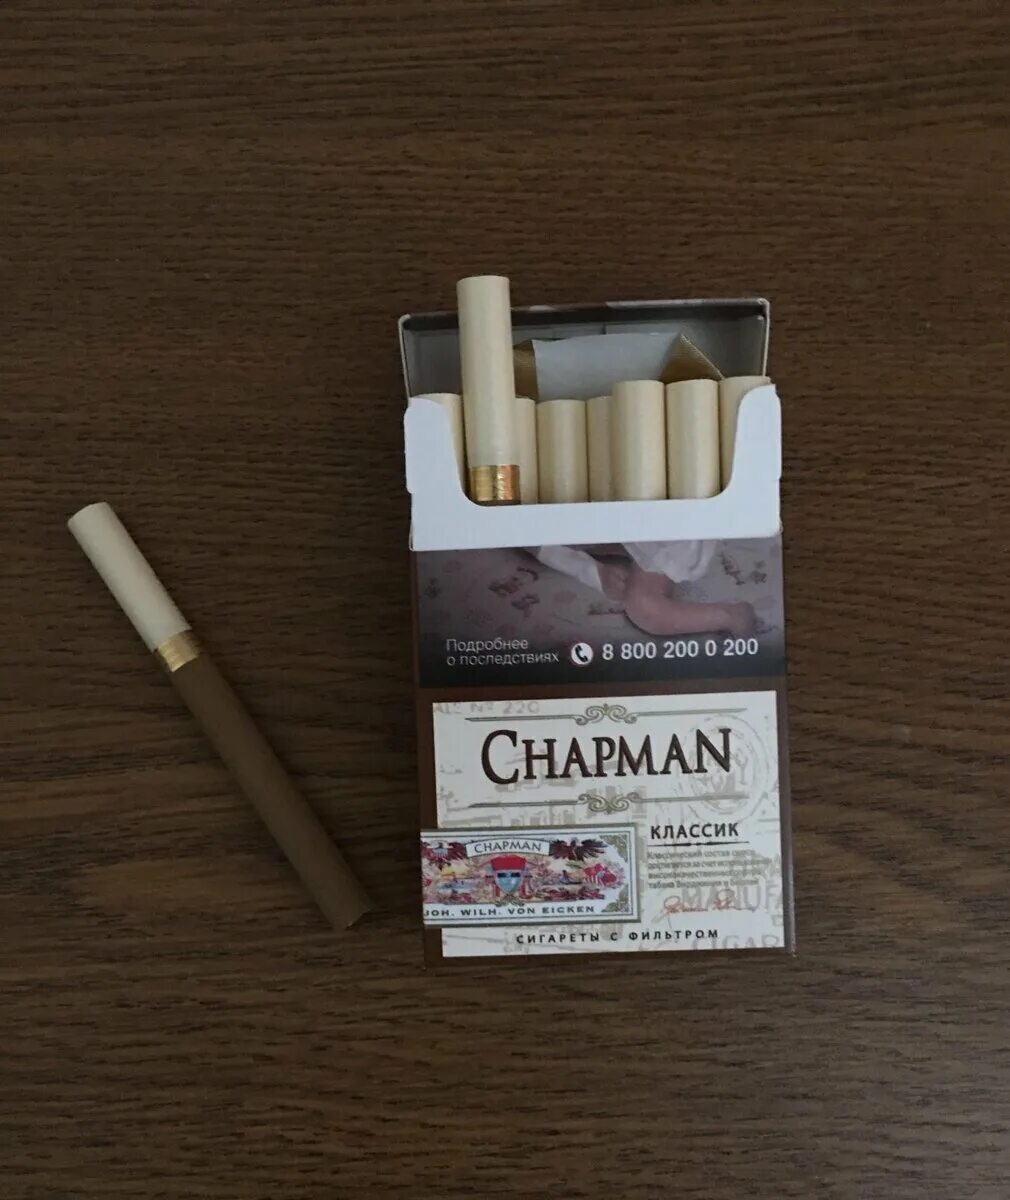 Чапман компакт сигареты. Сигареты Чапман Браун тонкие. Чапмен сигареты Классик. Chapman сигареты вкусы Браун. Чапман сигареты класси.